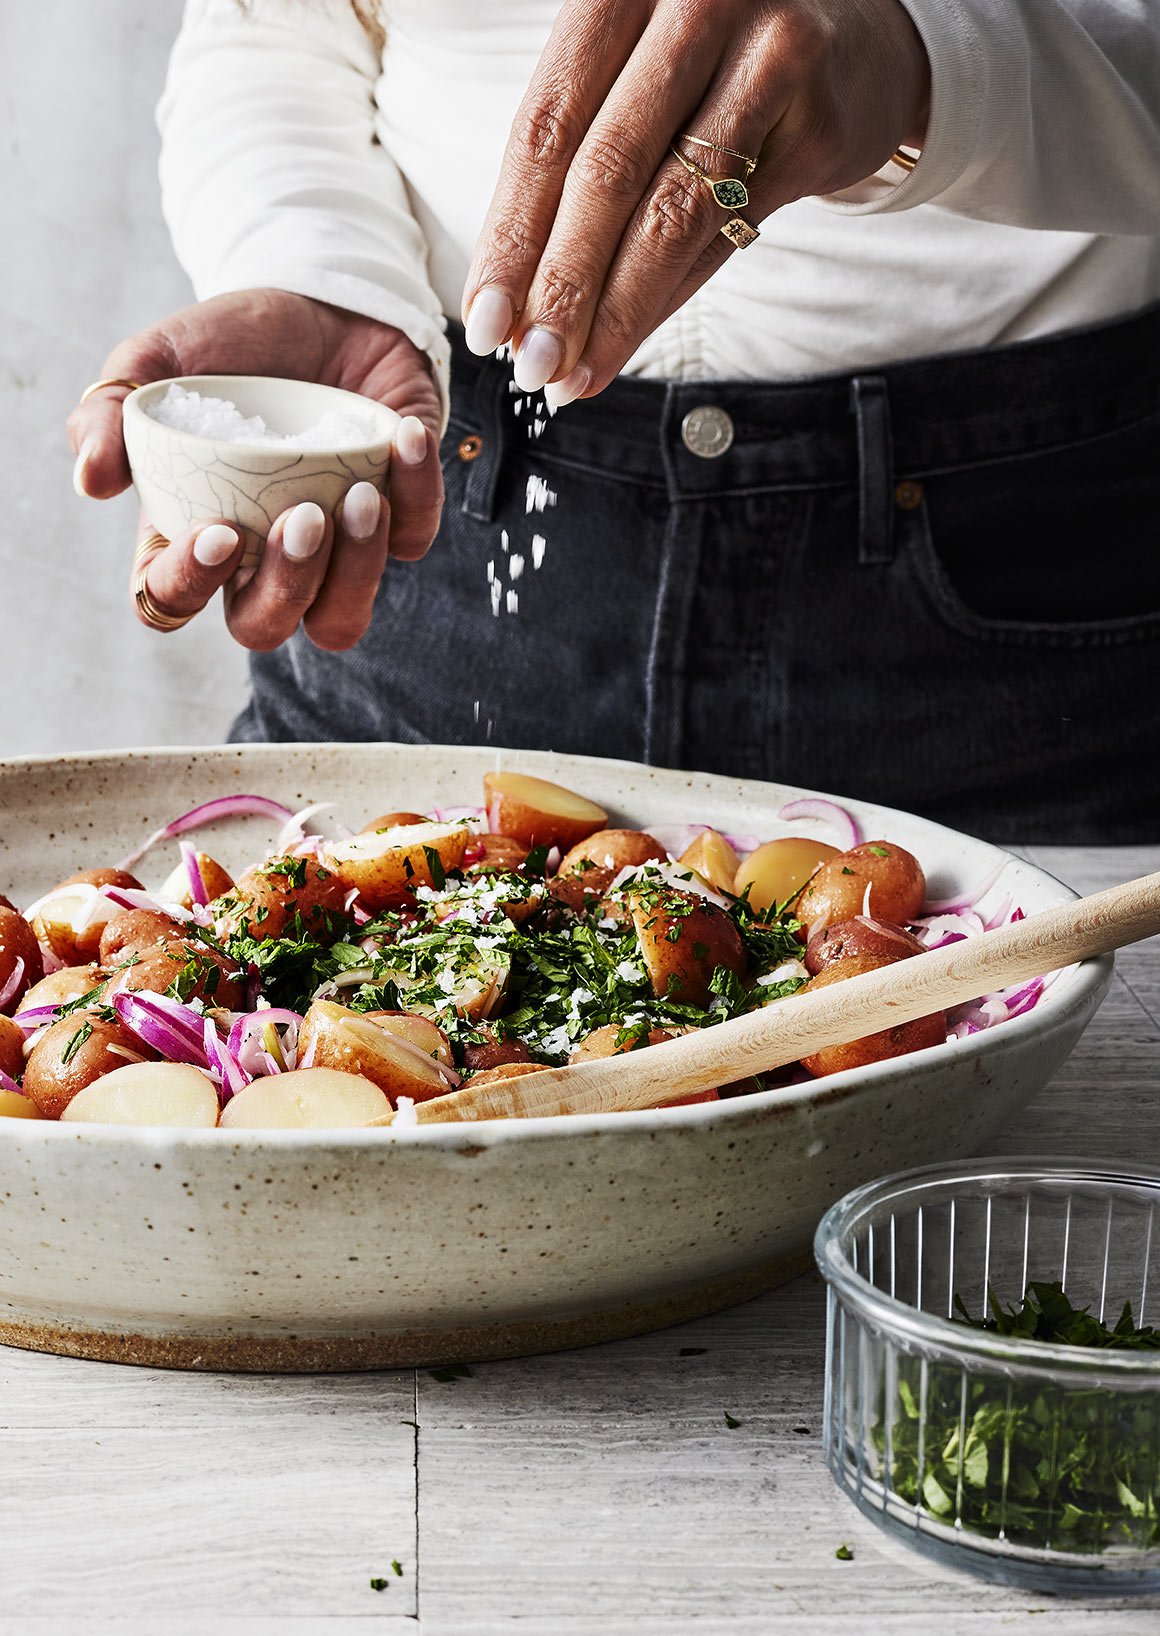 Potato-Salad-cook-book-recipe-intuitive-eating-diet-kale-junkie-heath-wellness-food-photographer-kolenko-lifespan-heathspan.jpg